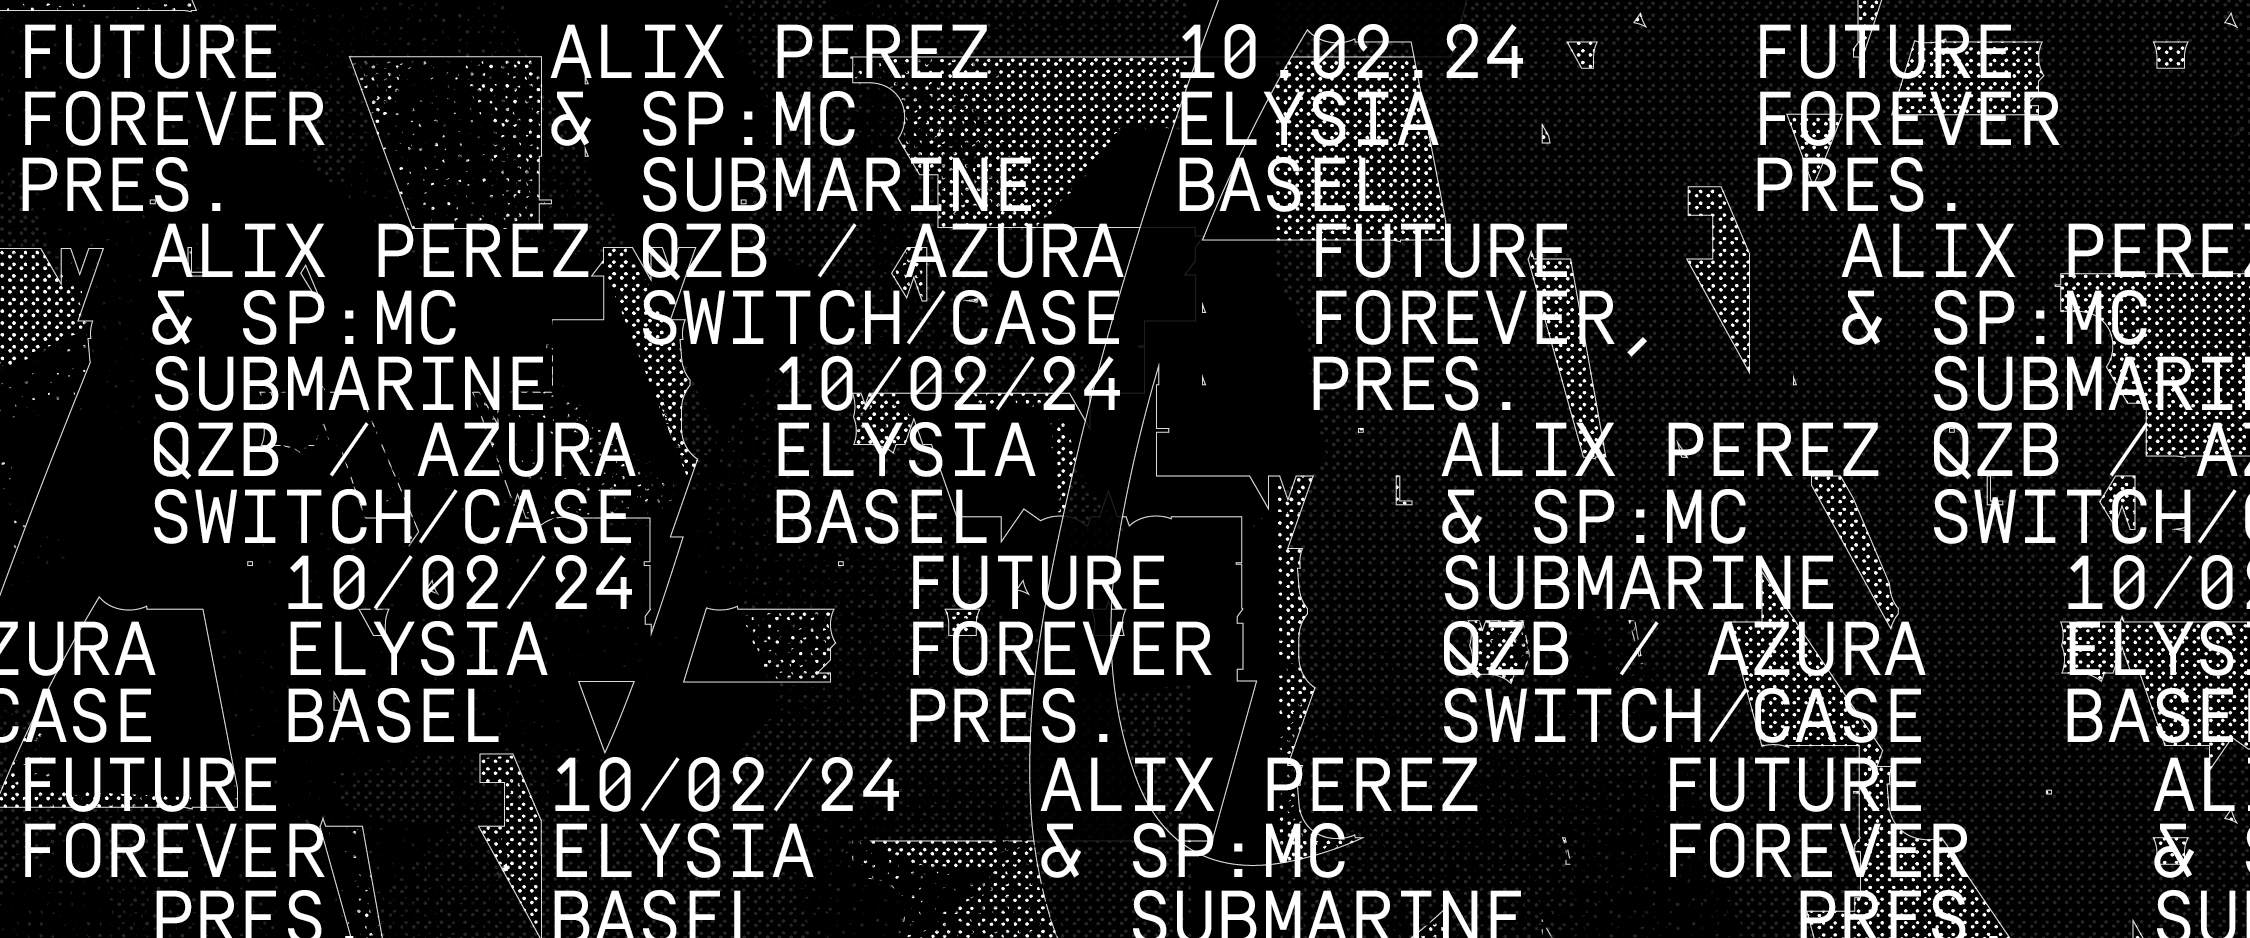 Future Forever: Alix Perez & SP:MC - Página frontal